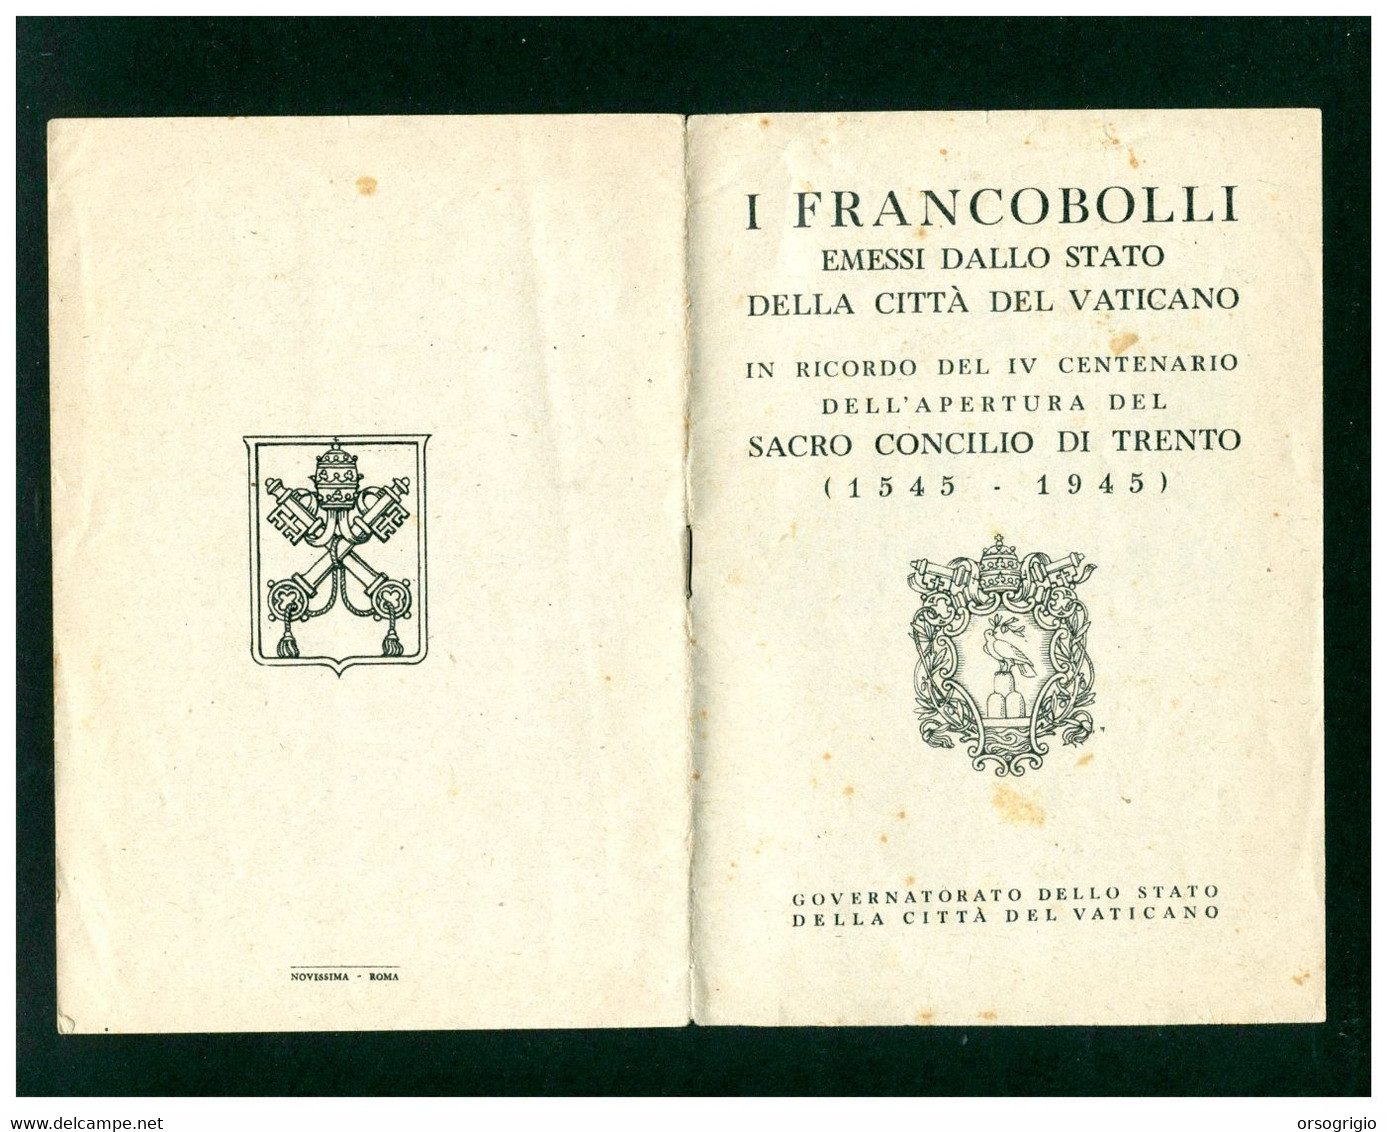 VATICANO - Libretto Dei FRANCOBOLLI EMESSI IN RICORDO DELLA APERTURA SACRO CONCILIO DI TRENTO 1945 - Variétés & Curiosités